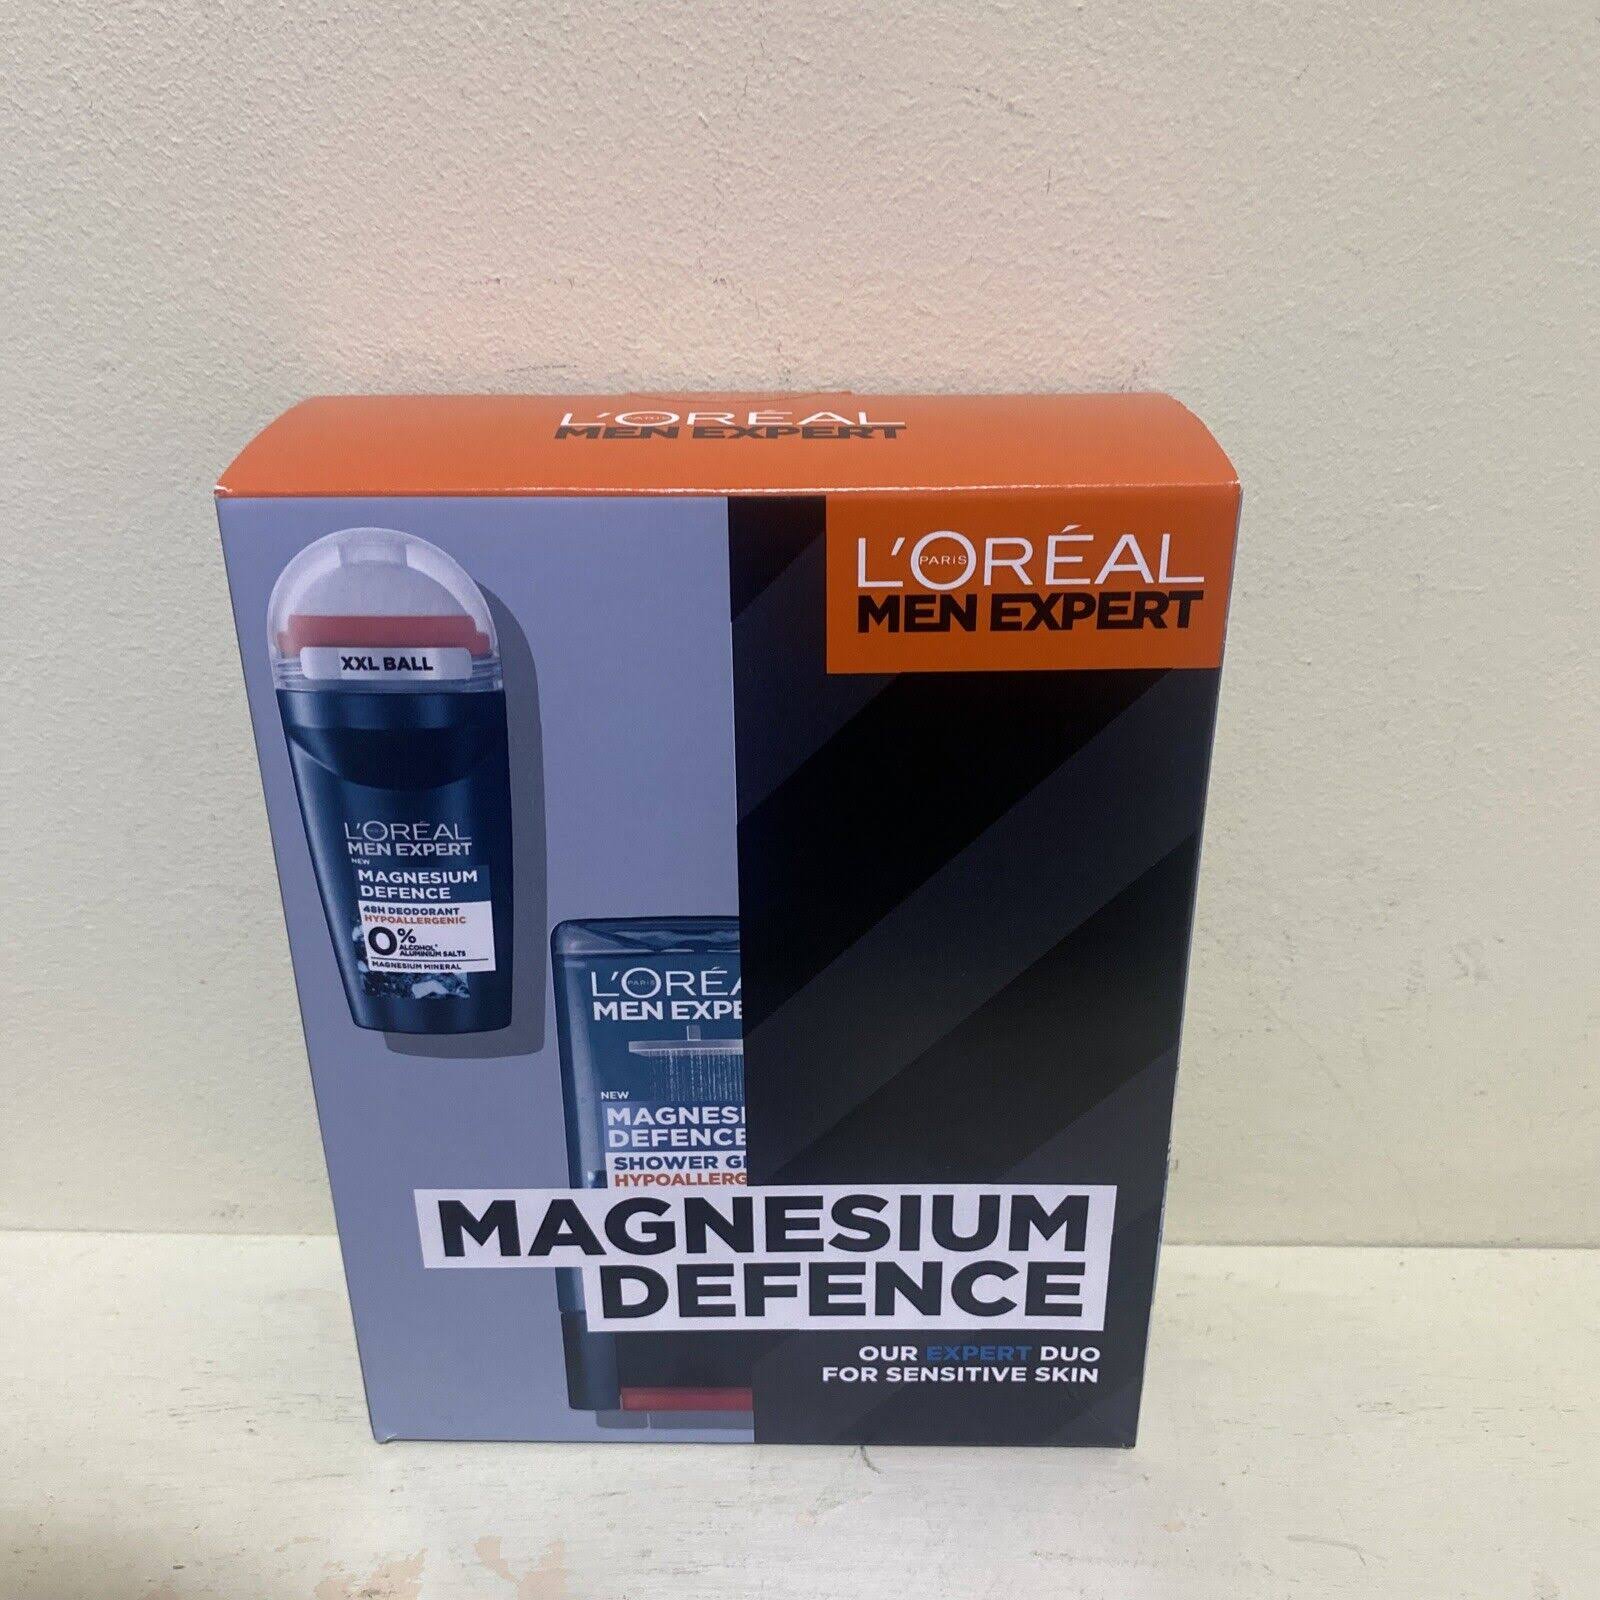 L'Oreal Men Expert Magnesium Defence Gift Set